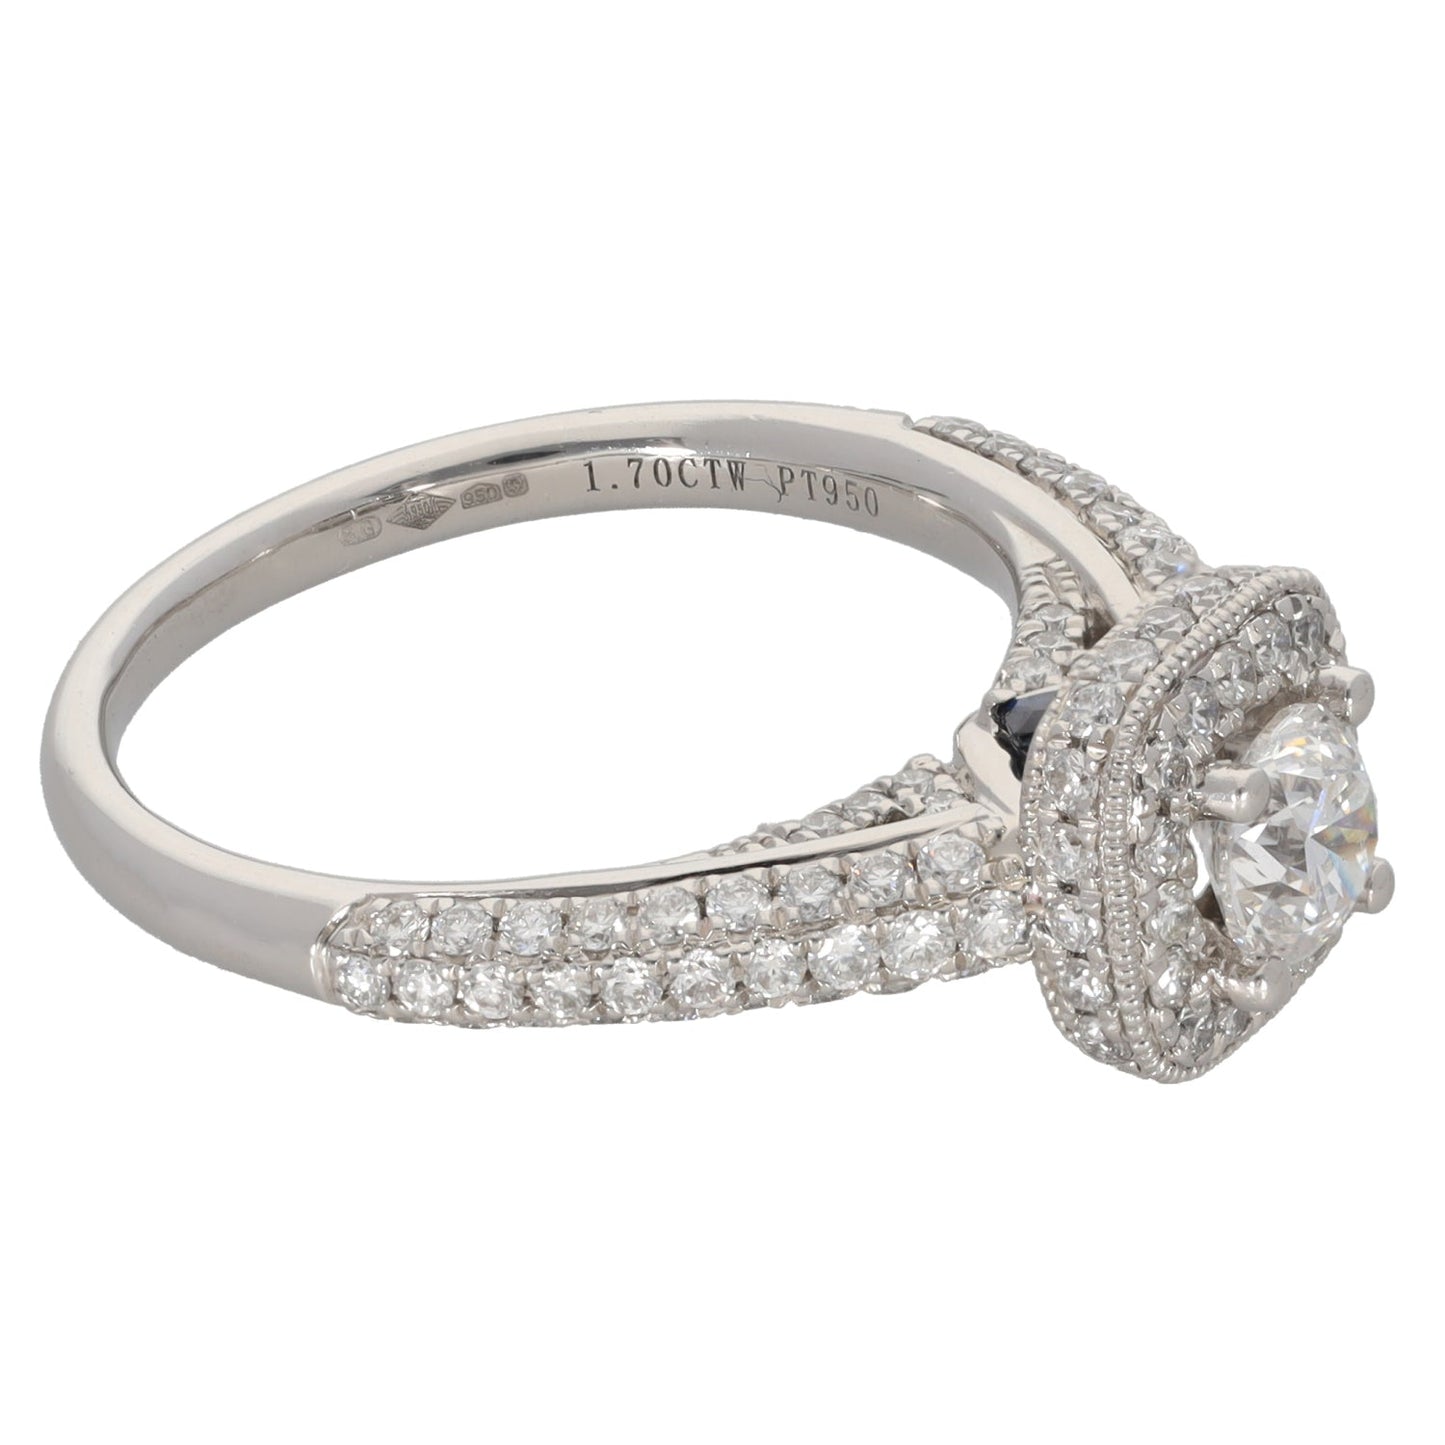 Platinum Vera Wang 1.70ct Diamond Cluster Ring Size R